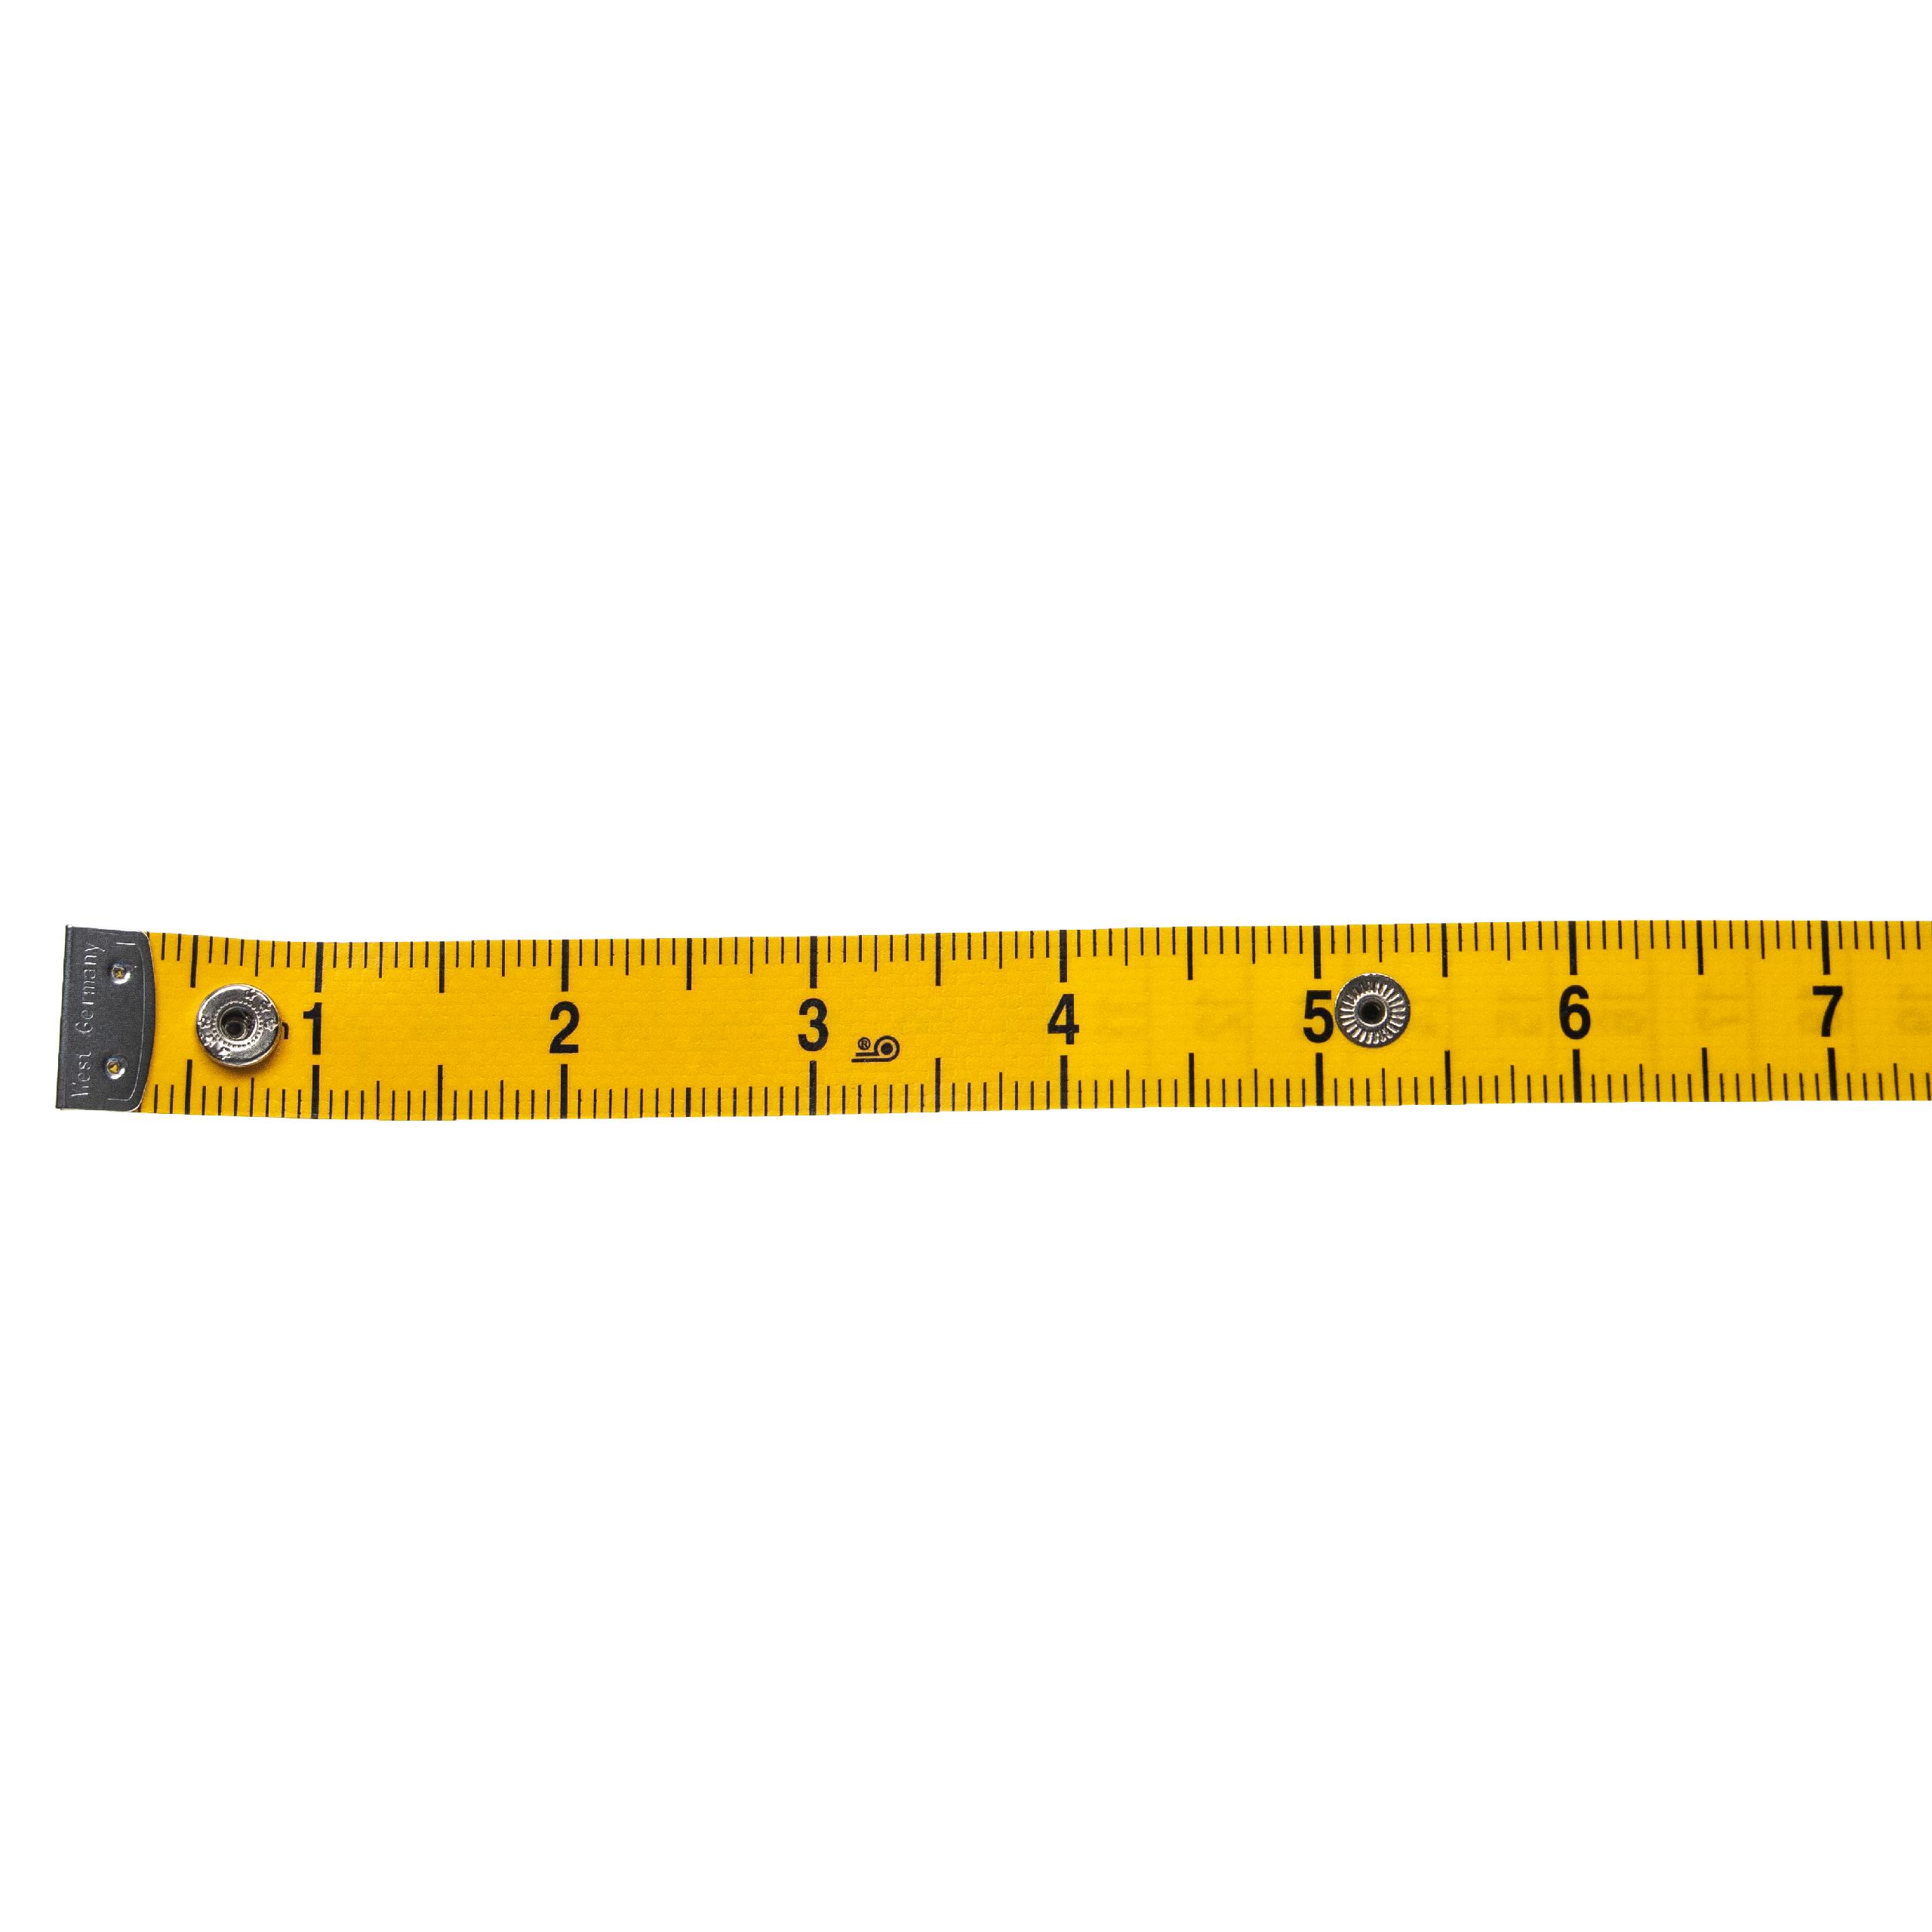 vhbw Tailor's Measuring Tape with Push Button - Metre Measure, 150 cm, 4 Colours, Cm + Inch Scale, Flexible